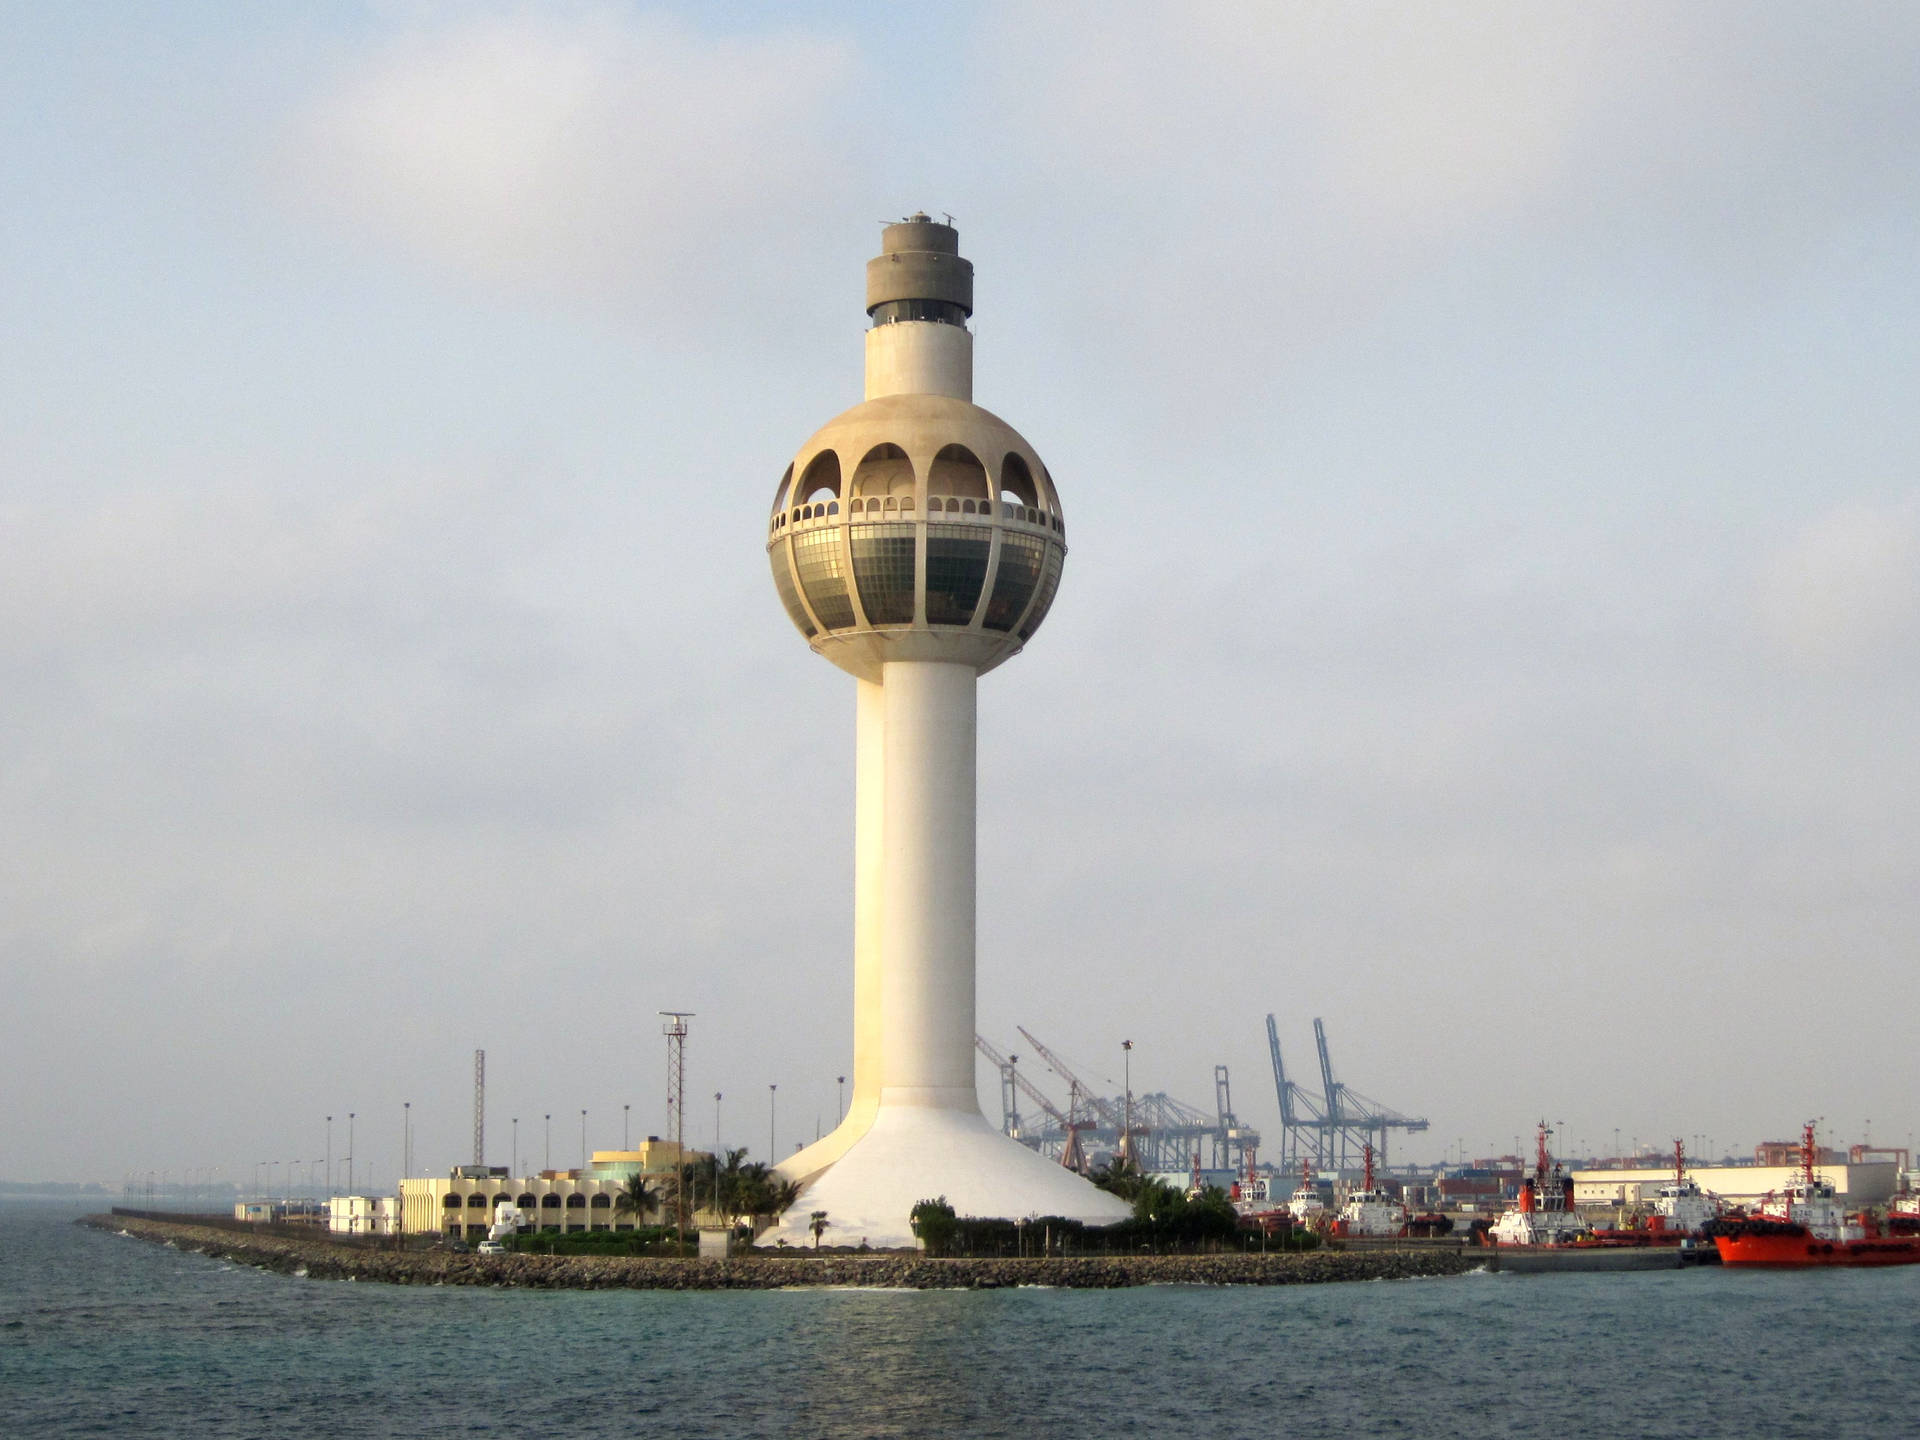 Jeddah Saudi Arabia's Lighthouse